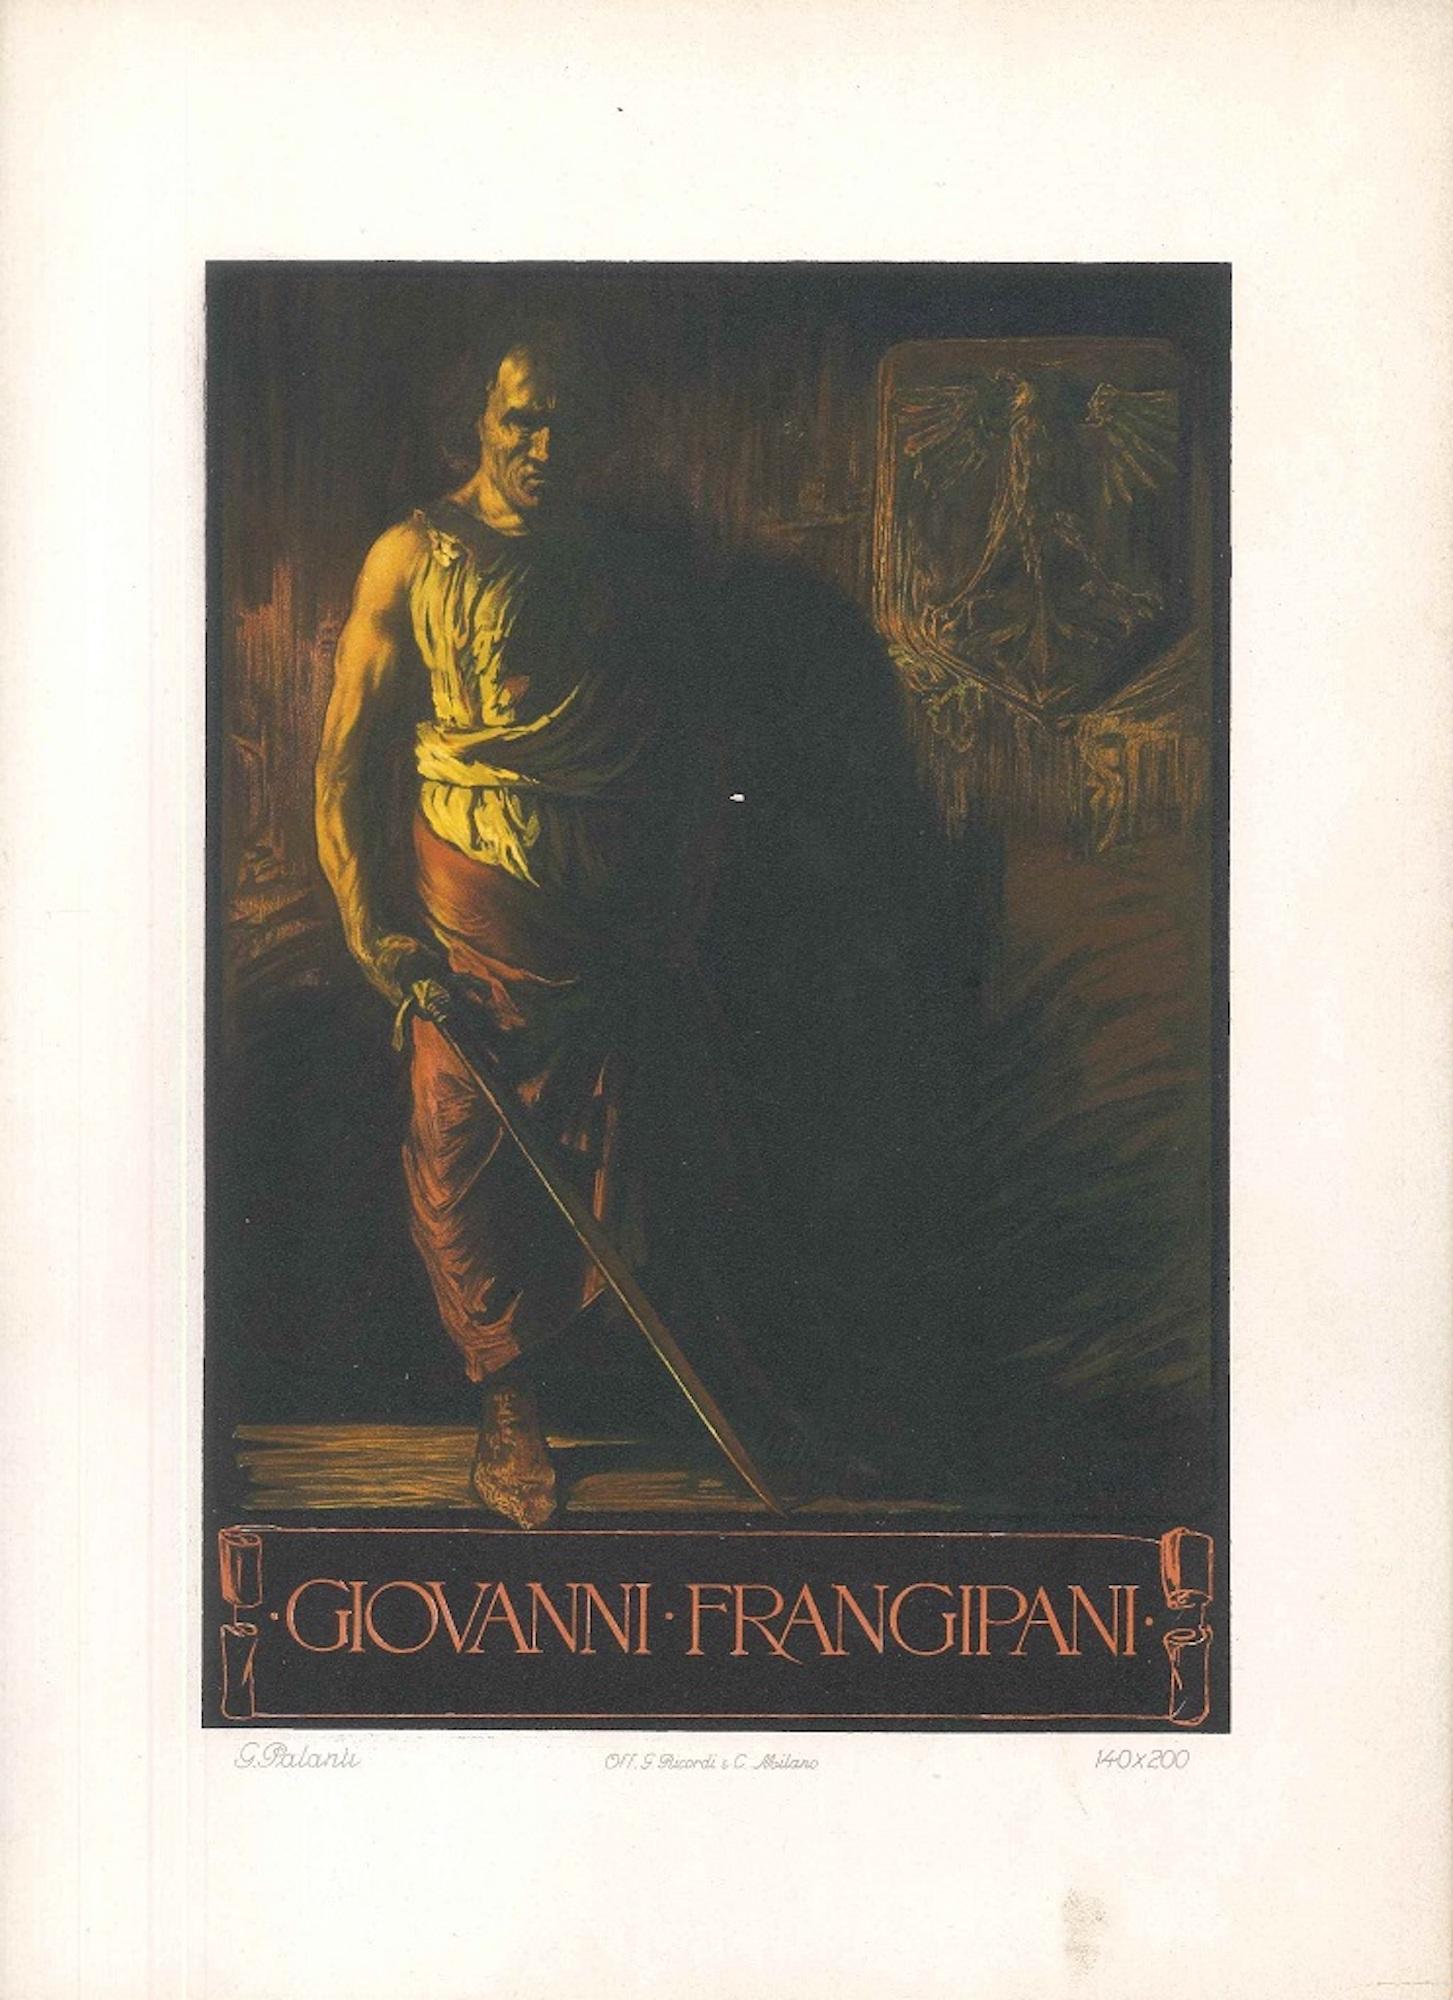 Giovanni Frangipani - Vintage Advertising Lithograph by G. Palanti - 1900 ca. - Print by Giuseppe Palanti